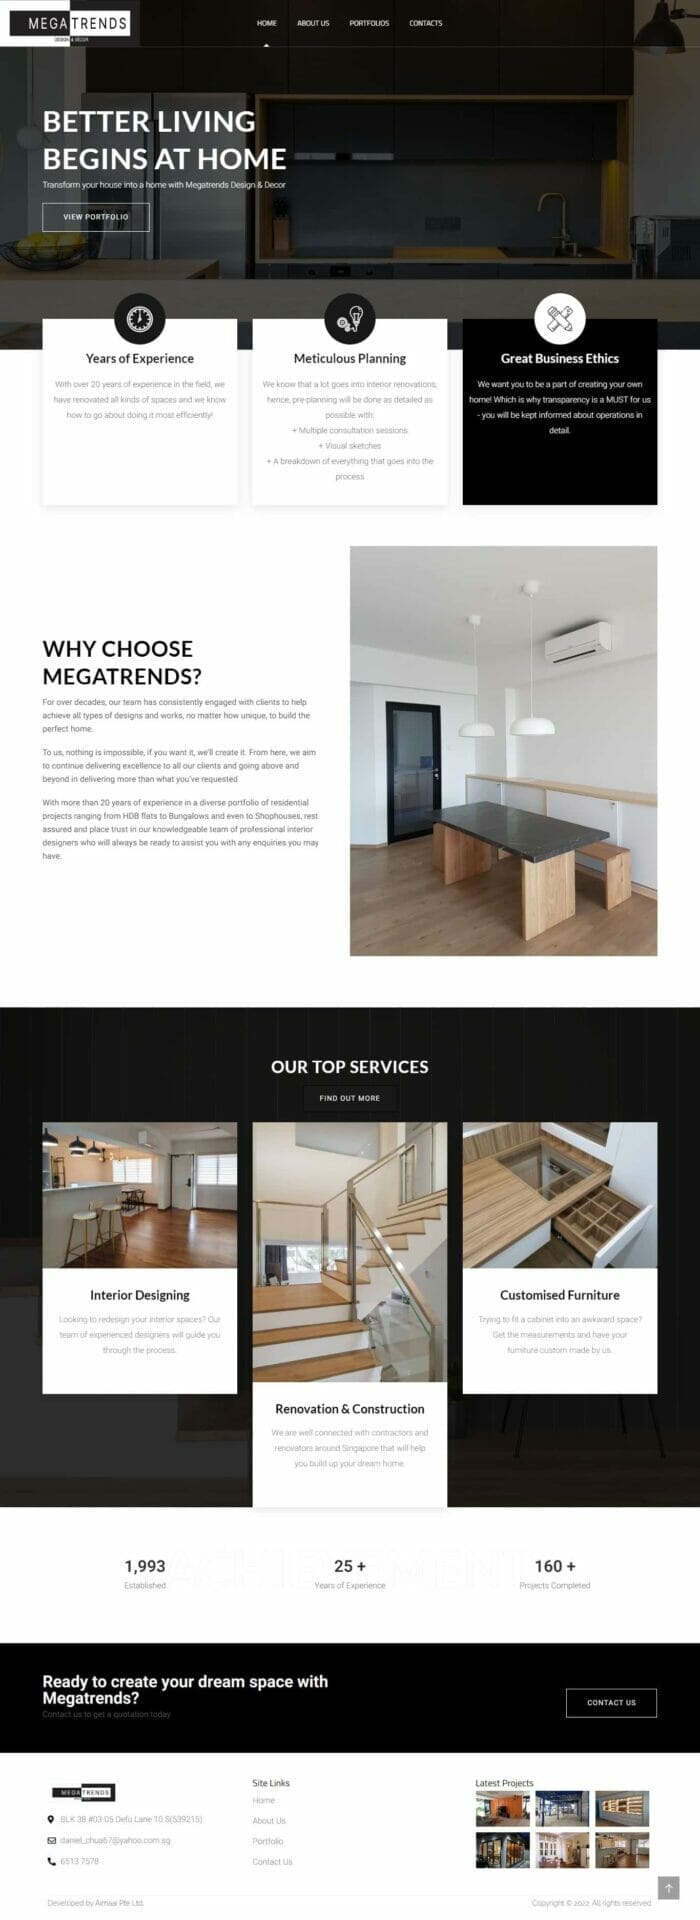 A black and white portfolio website design for a construction company using template-based web development.